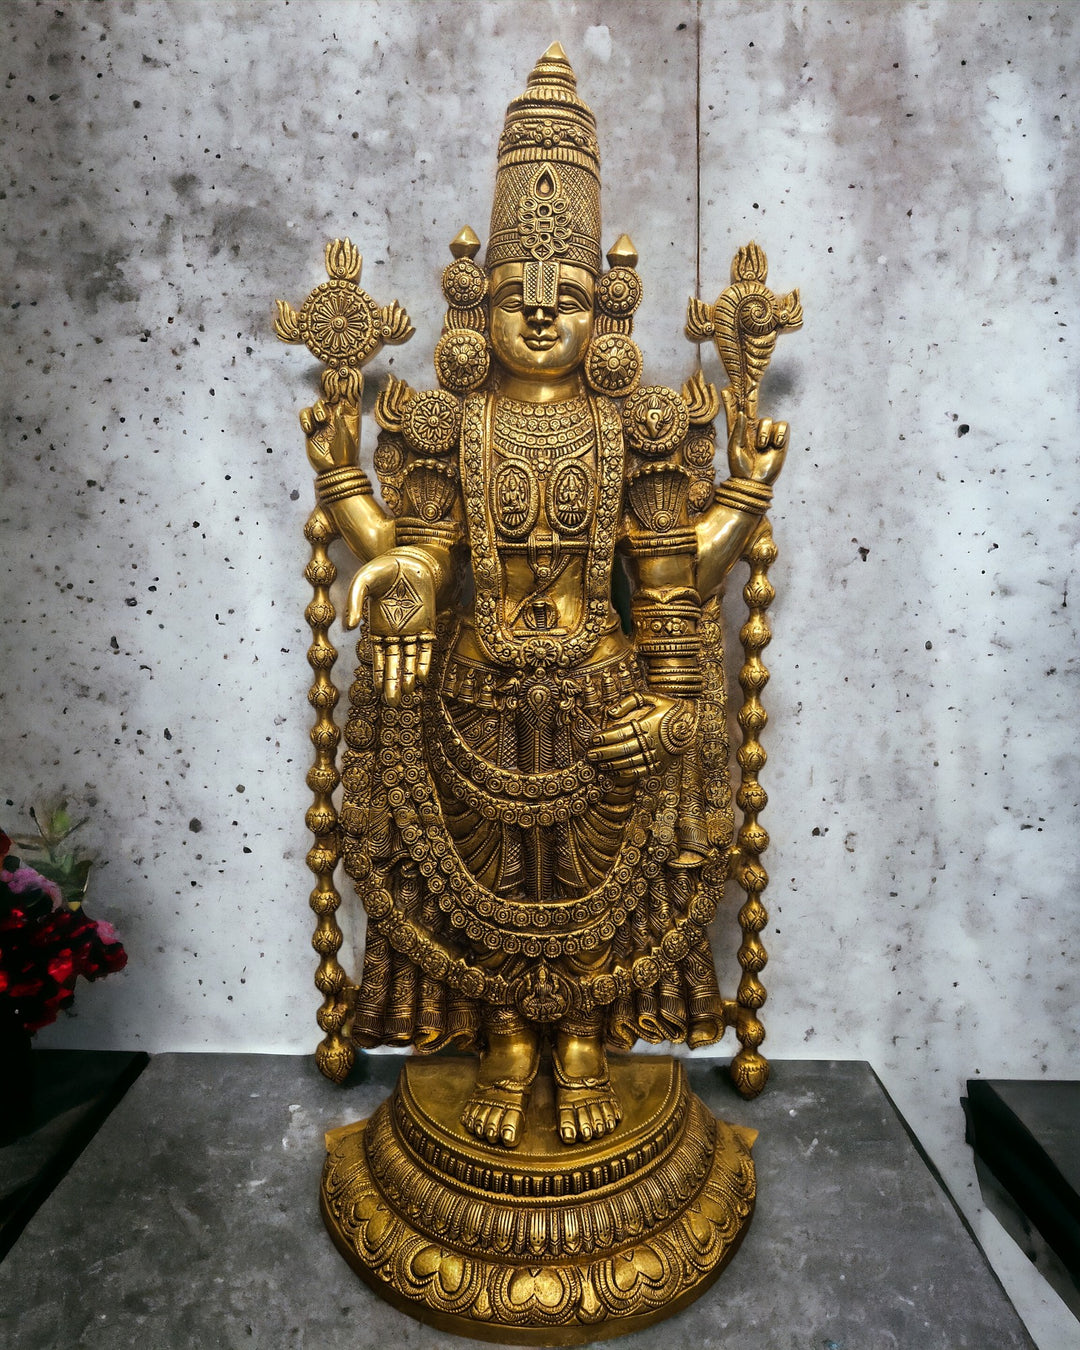 Tamas Brass Tirupati Bala Ji God Idol (38 Inches)